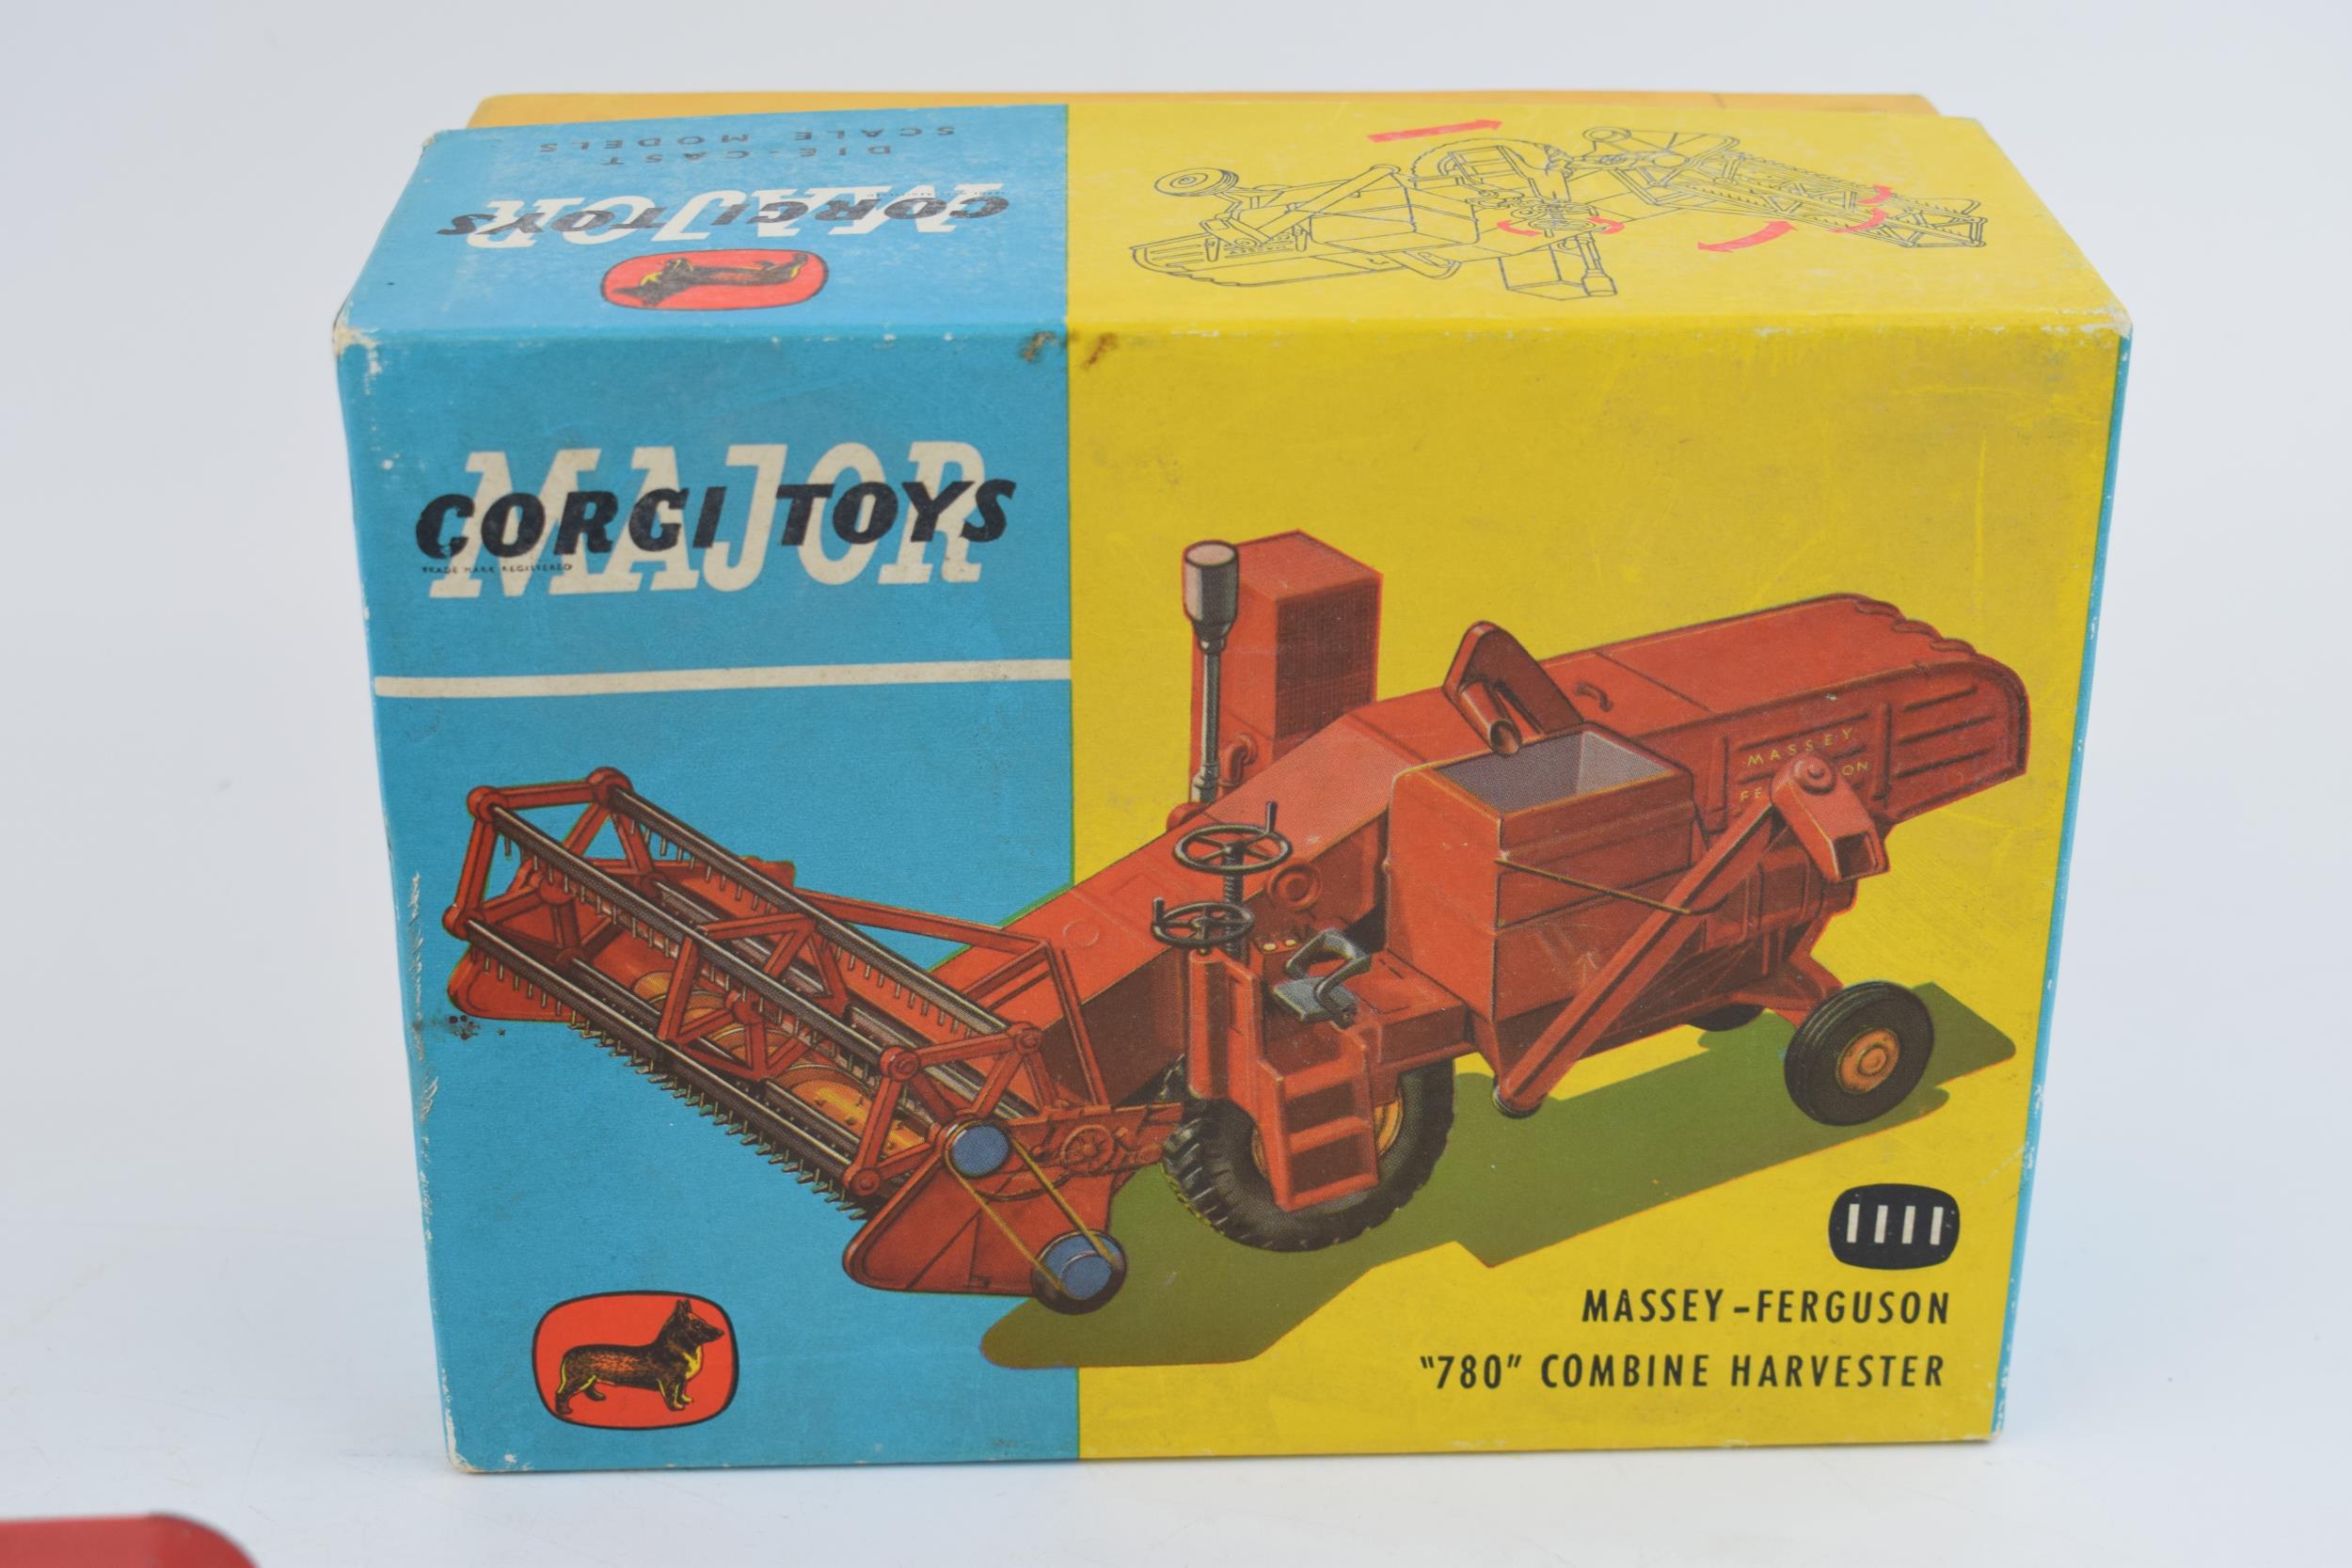 Boxed Corgi Toys Massey - Ferguson "780" Combine Harvester 1111. Vintage die-cast model vehicle. - Image 2 of 3